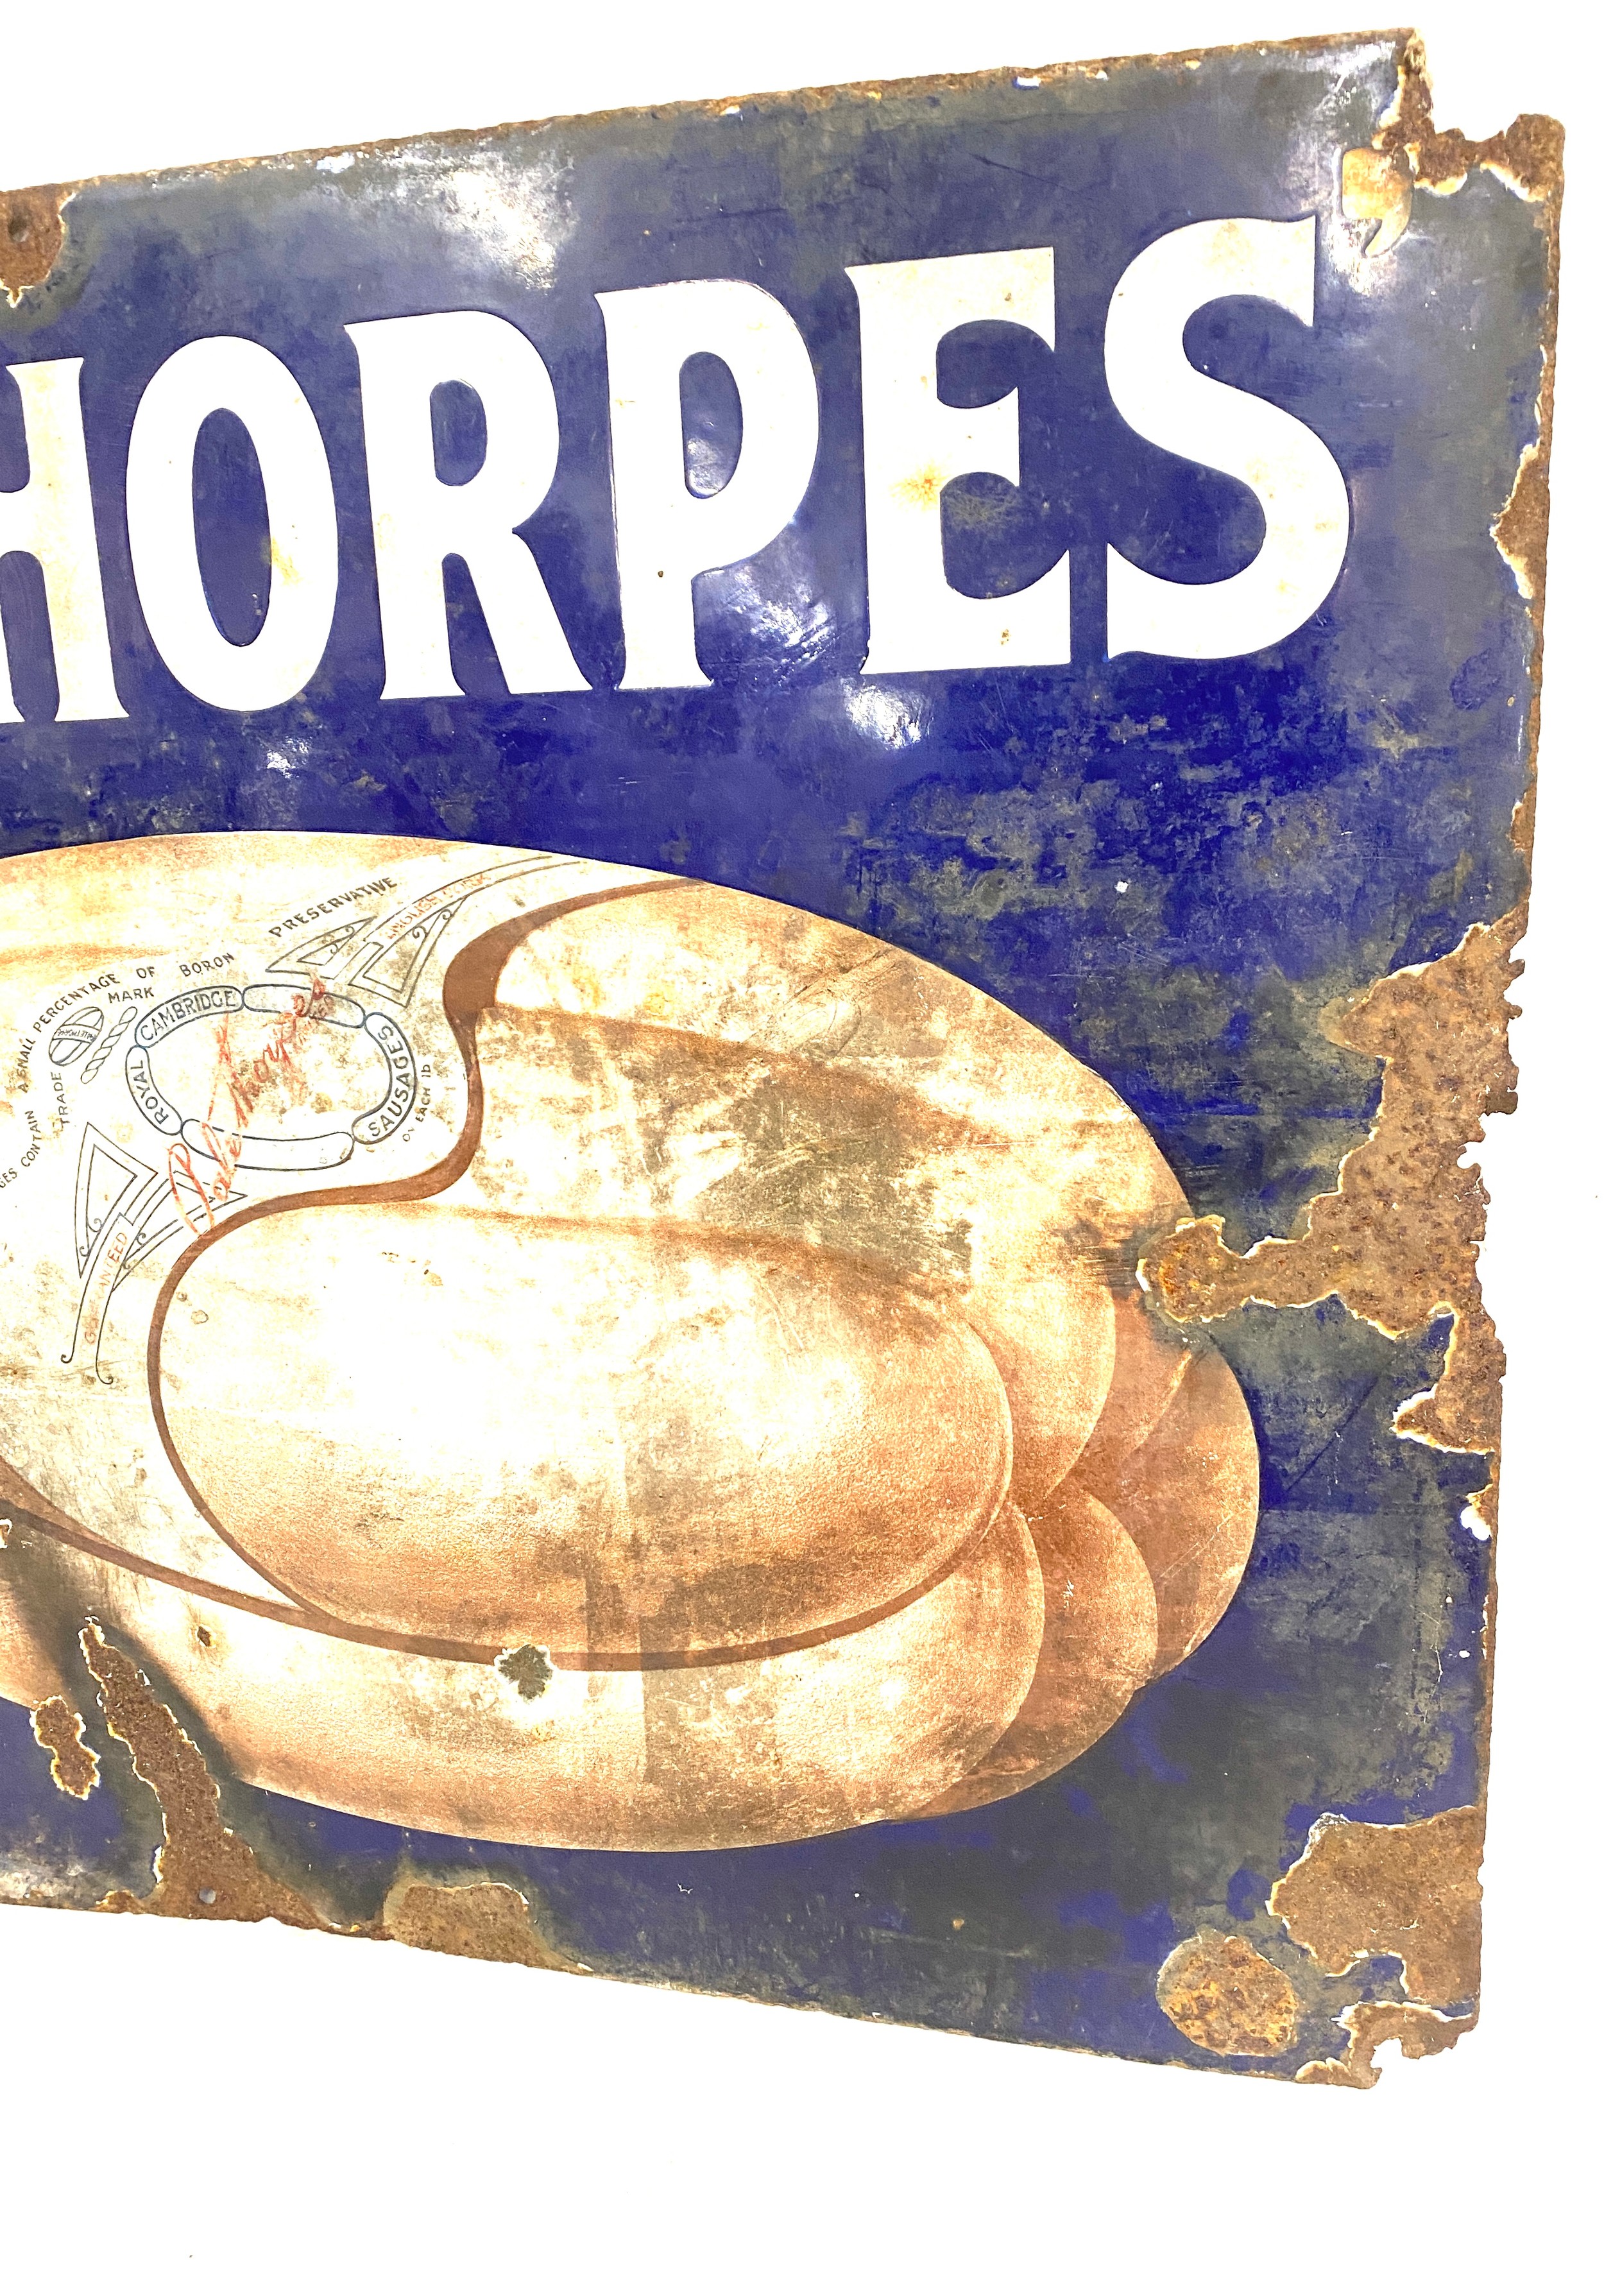 Vintage Palethorpes Royal Cambridge sausage advertising metal sign measures approx 24" tall 36" - Image 2 of 3